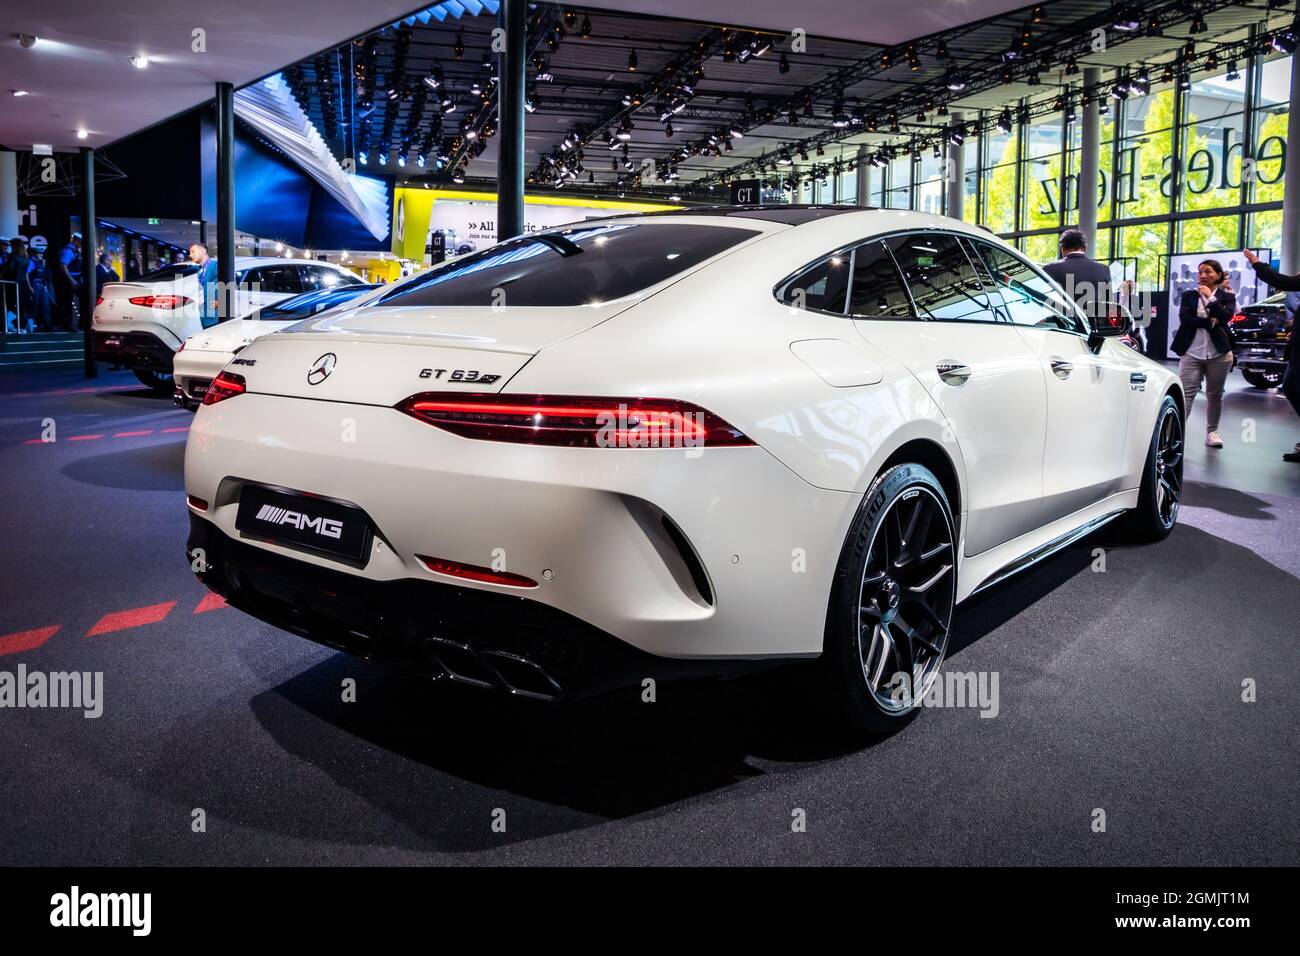 Mercedes-AMG GT 63S sports car showcased at the Frankfurt IAA Motor Show. Germany - September 10, 2019 Stock Photo